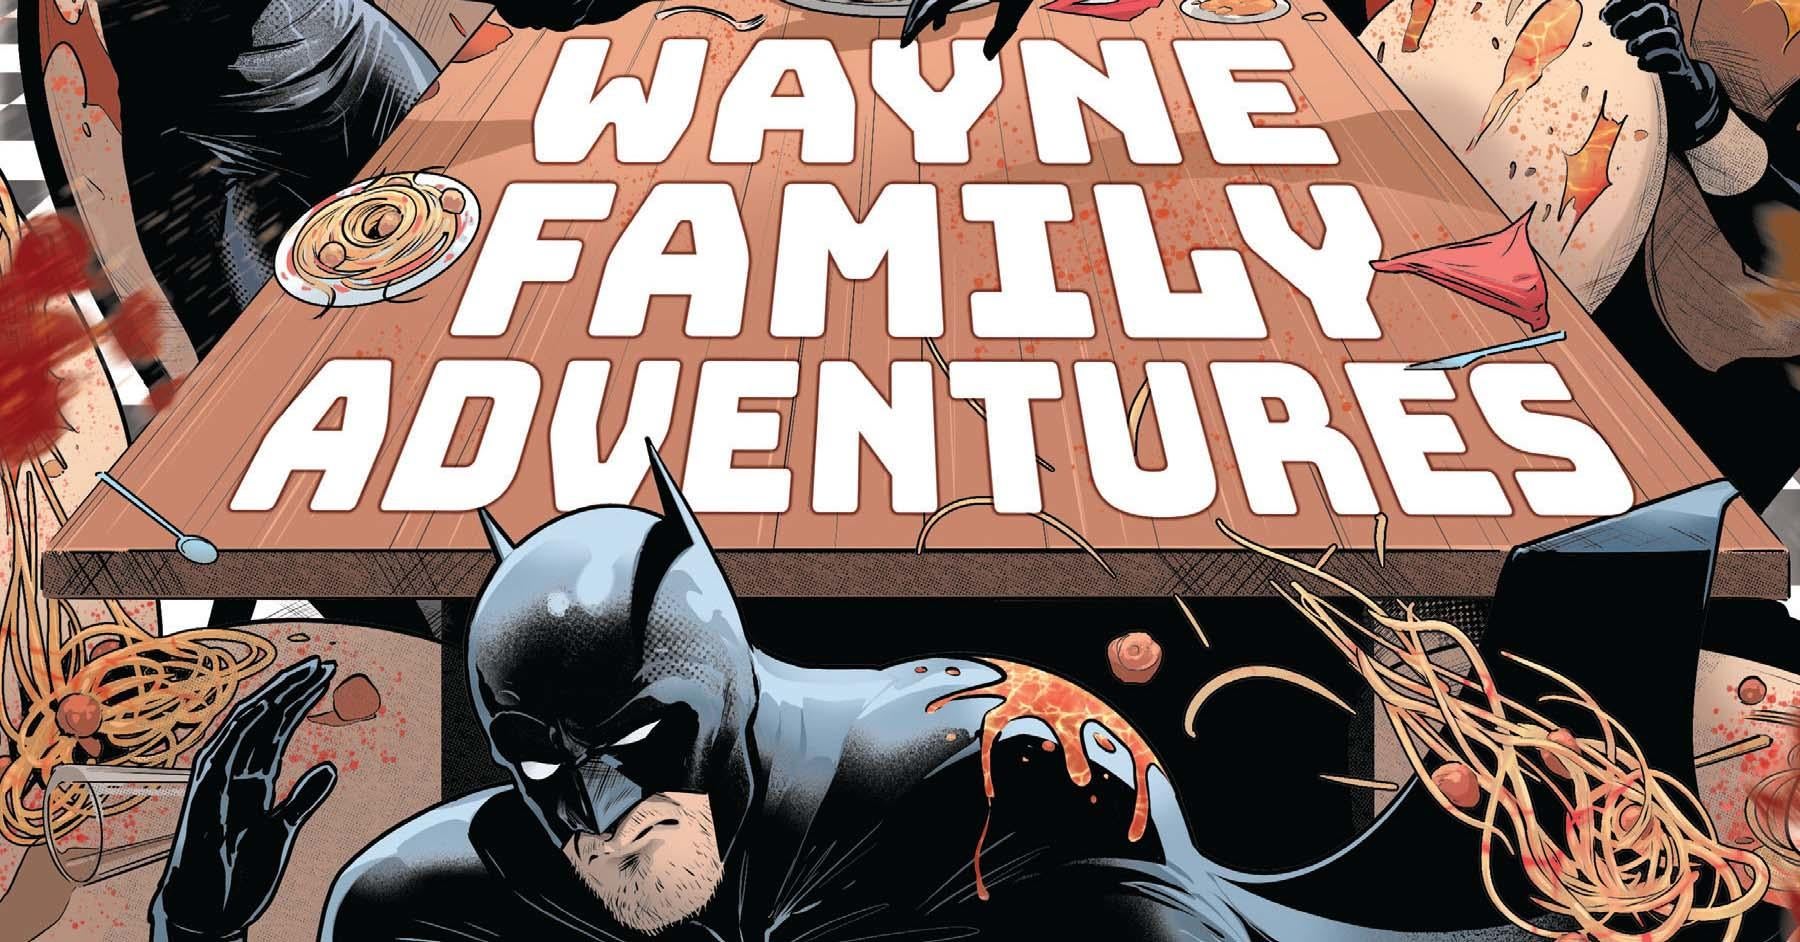 Webtoon reveals creative team & first look at BATMAN: WAYNE FAMILY